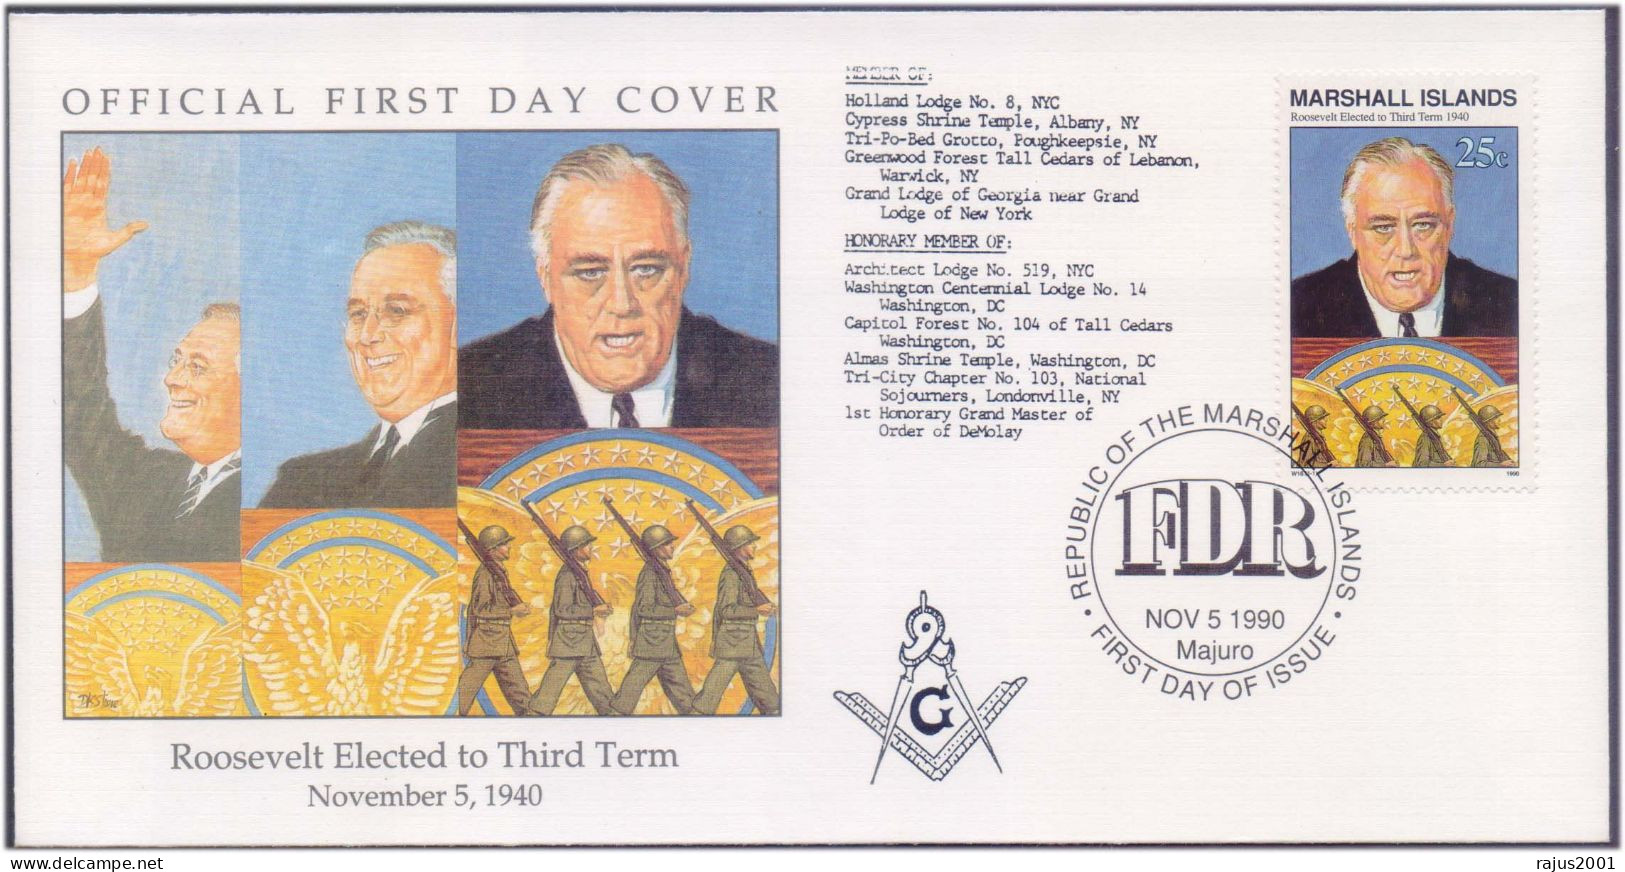 Franklin D Roosevelt 32nd US President, Holland Lodge No. 8 Architect Lodge No 519 Freemasonry Masonic Marshall FDC - Francmasonería